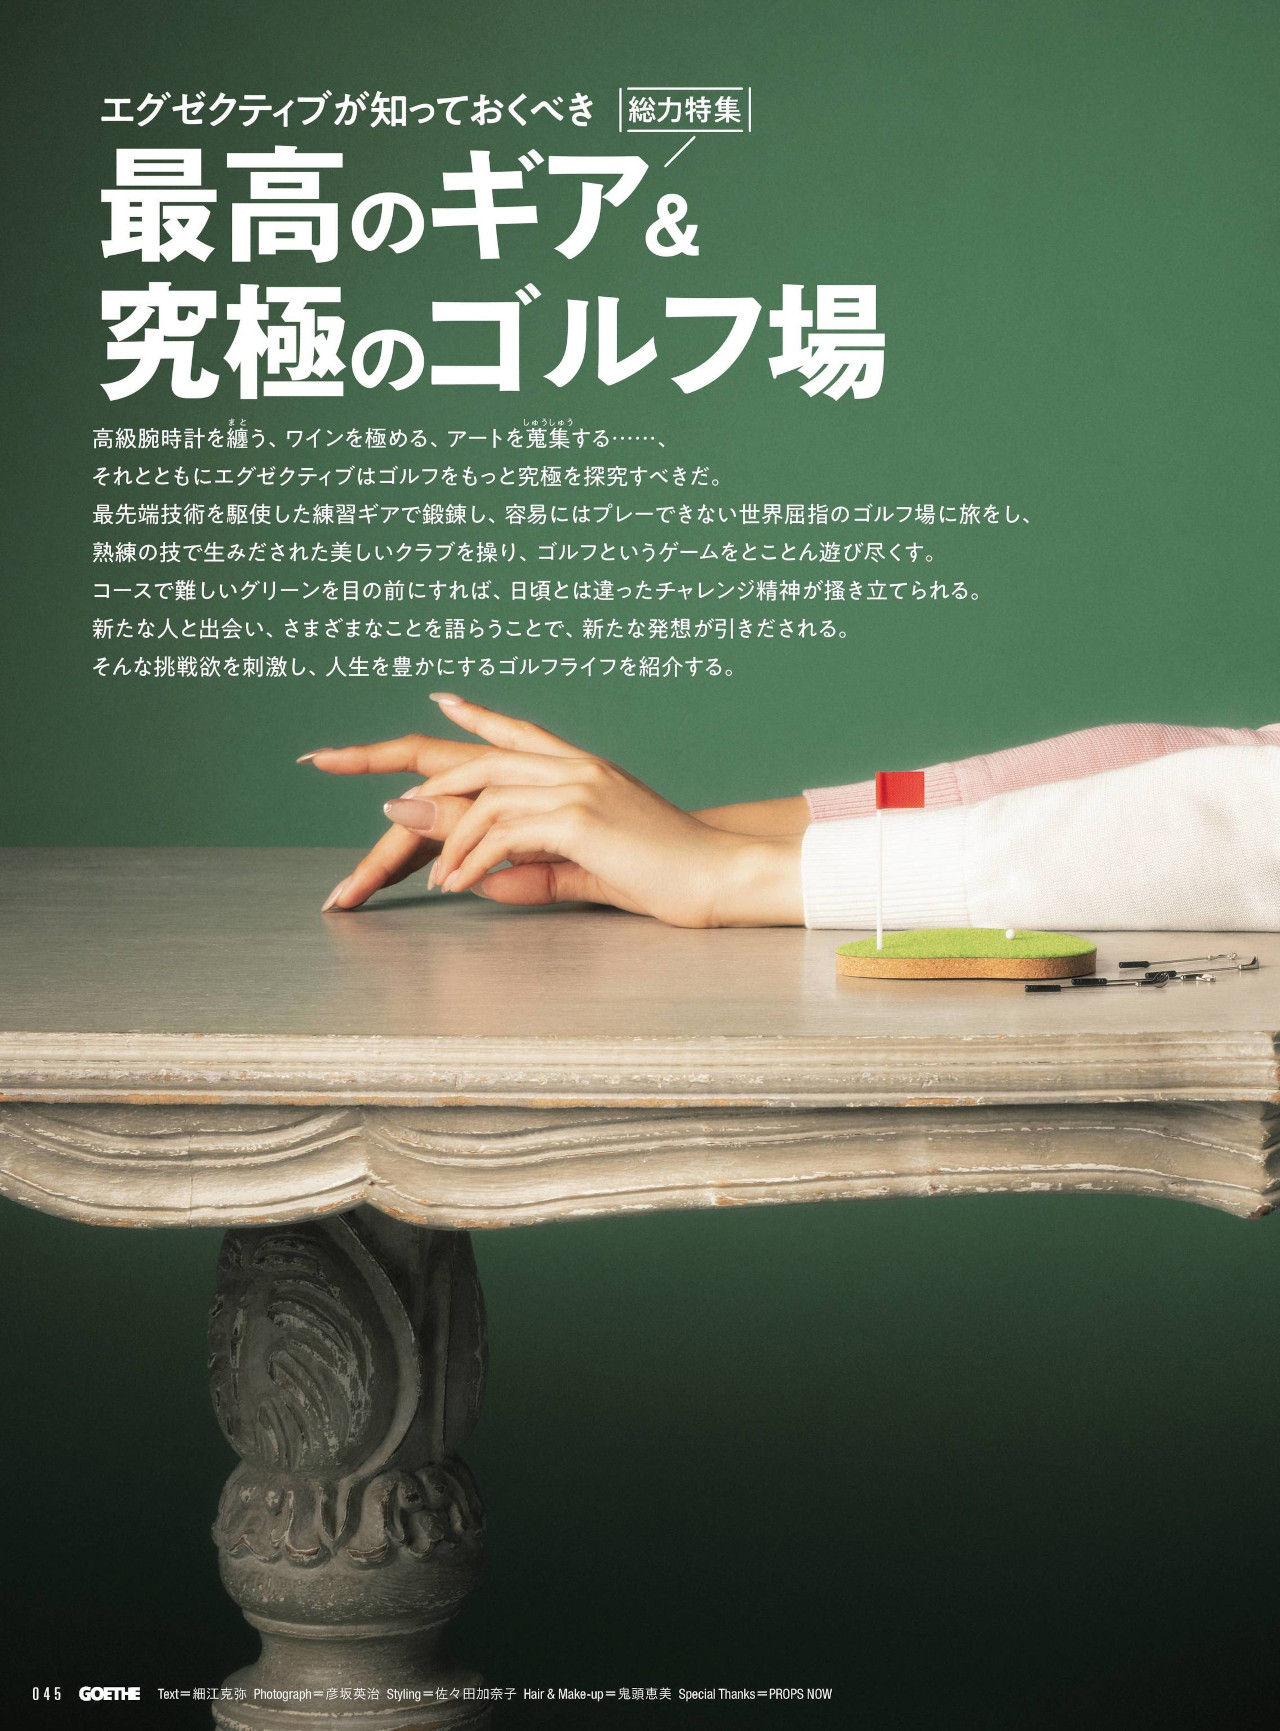 Reina Sumi 鷲見玲奈, Goethe Magazine 2022.01